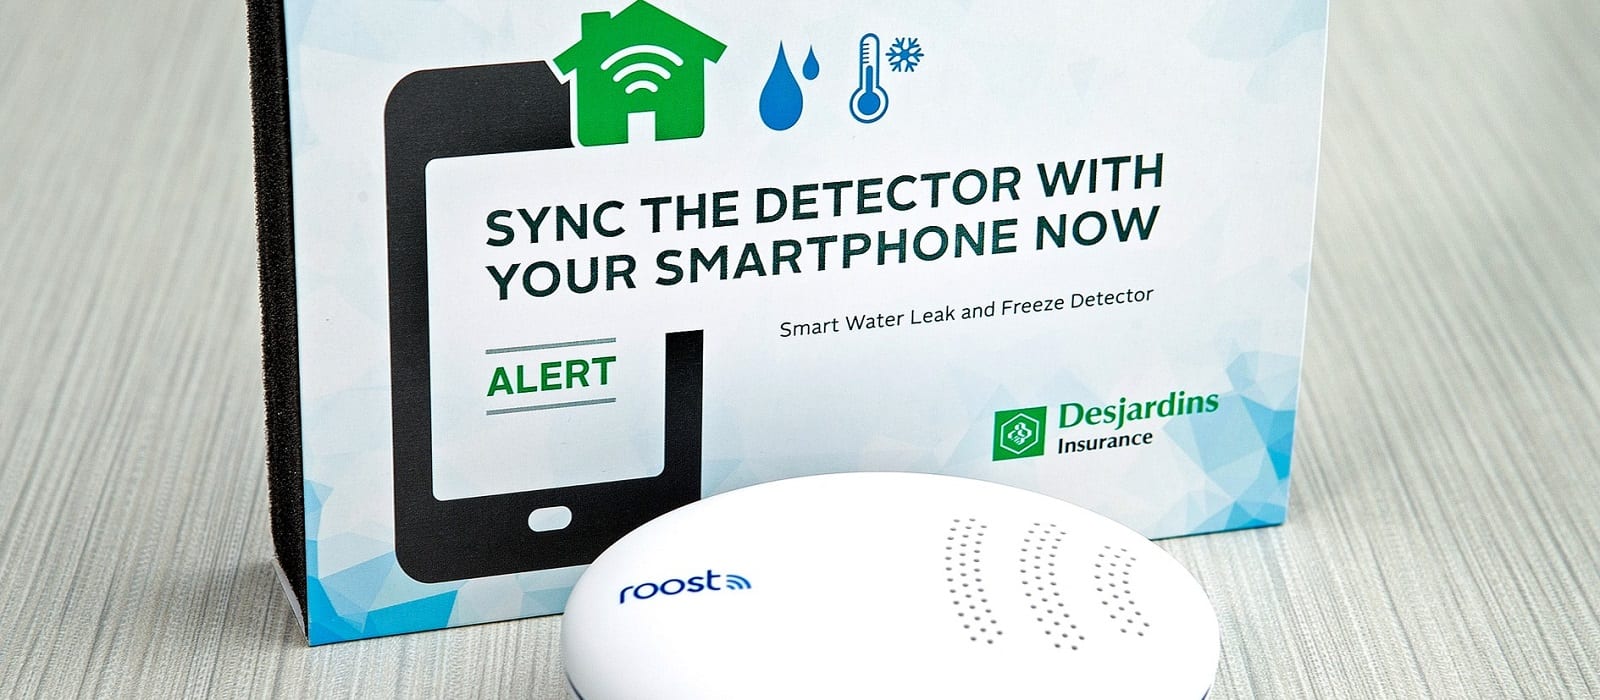 desjardins-alert-iot-smarthome-sensor-waterleakage